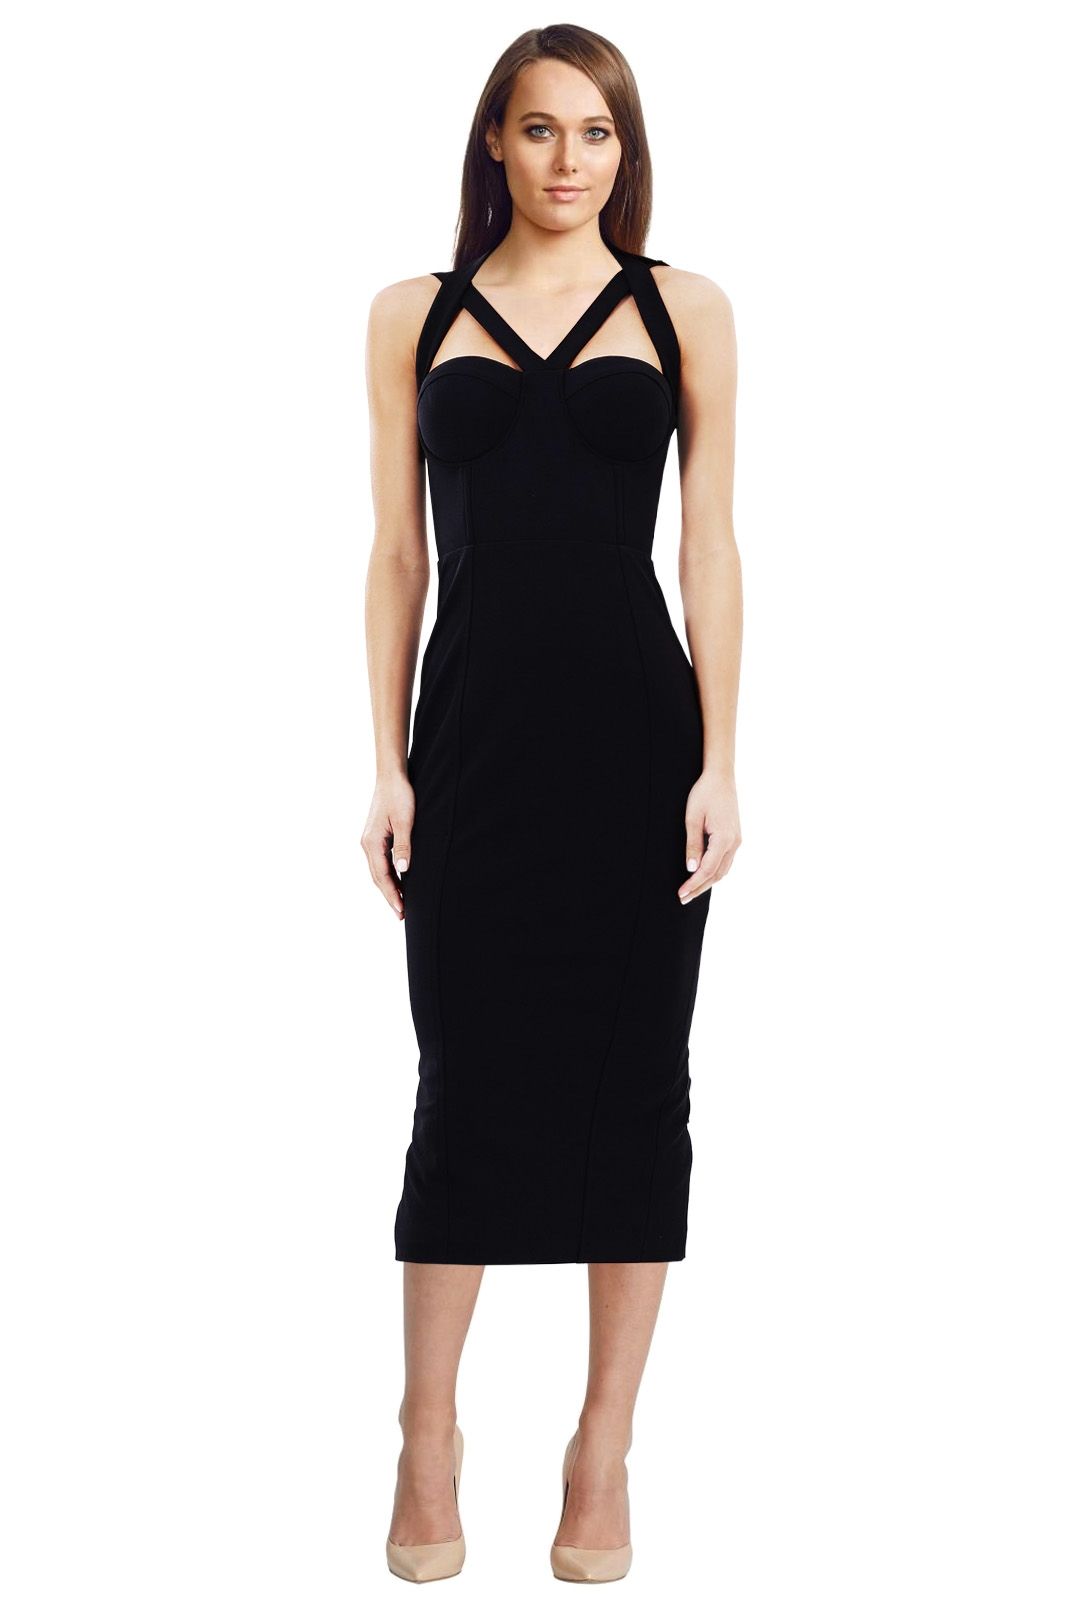 Misha Collection - Lorenza Dress - Black - Front